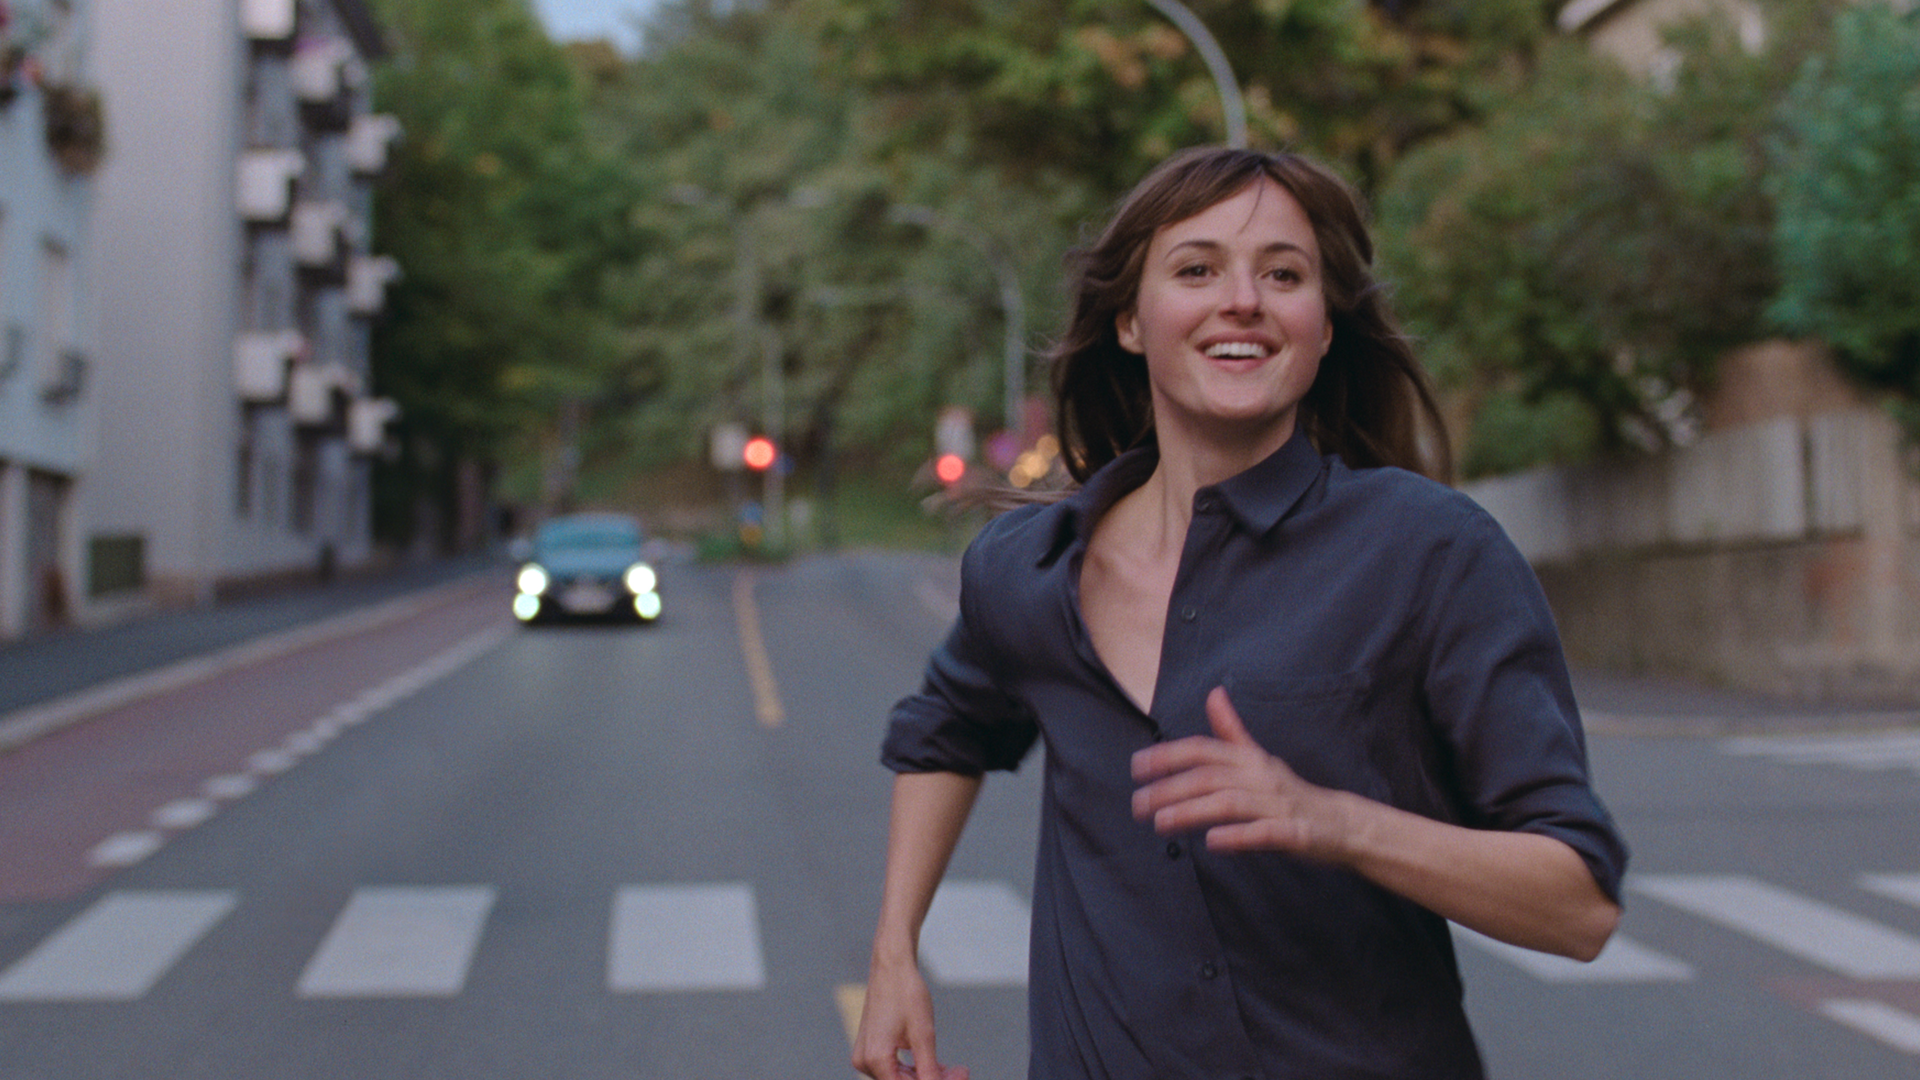 A woman runs in a street, smiling